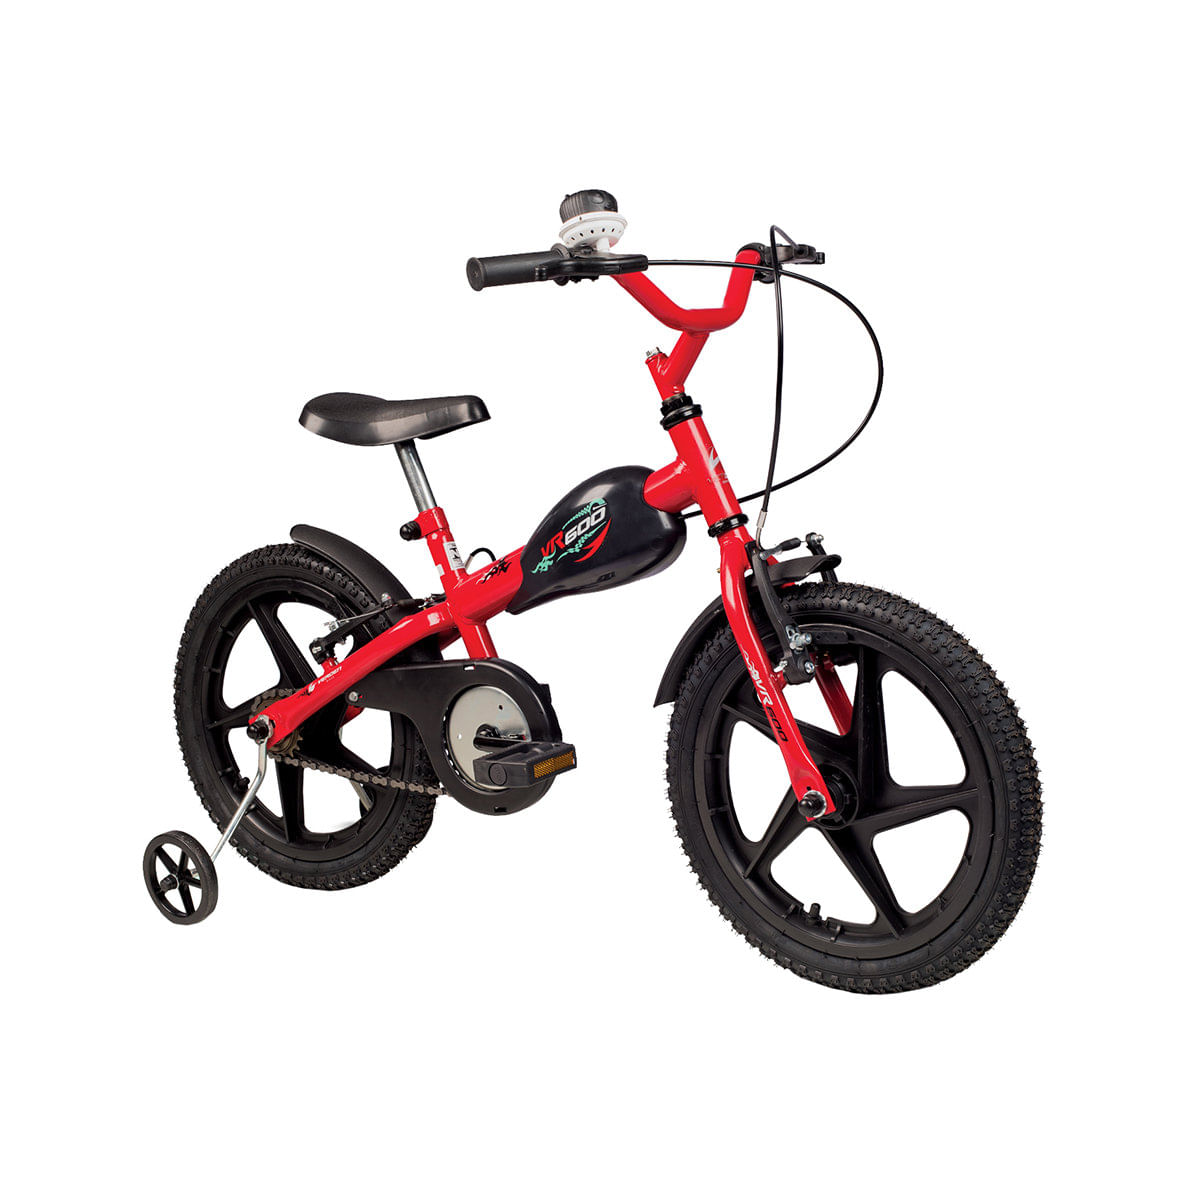 9985999_Bicicleta-Infantil-Aro-16-Verden-Bikes-VR-600-Vermelha-e-Preta_7_Zoom